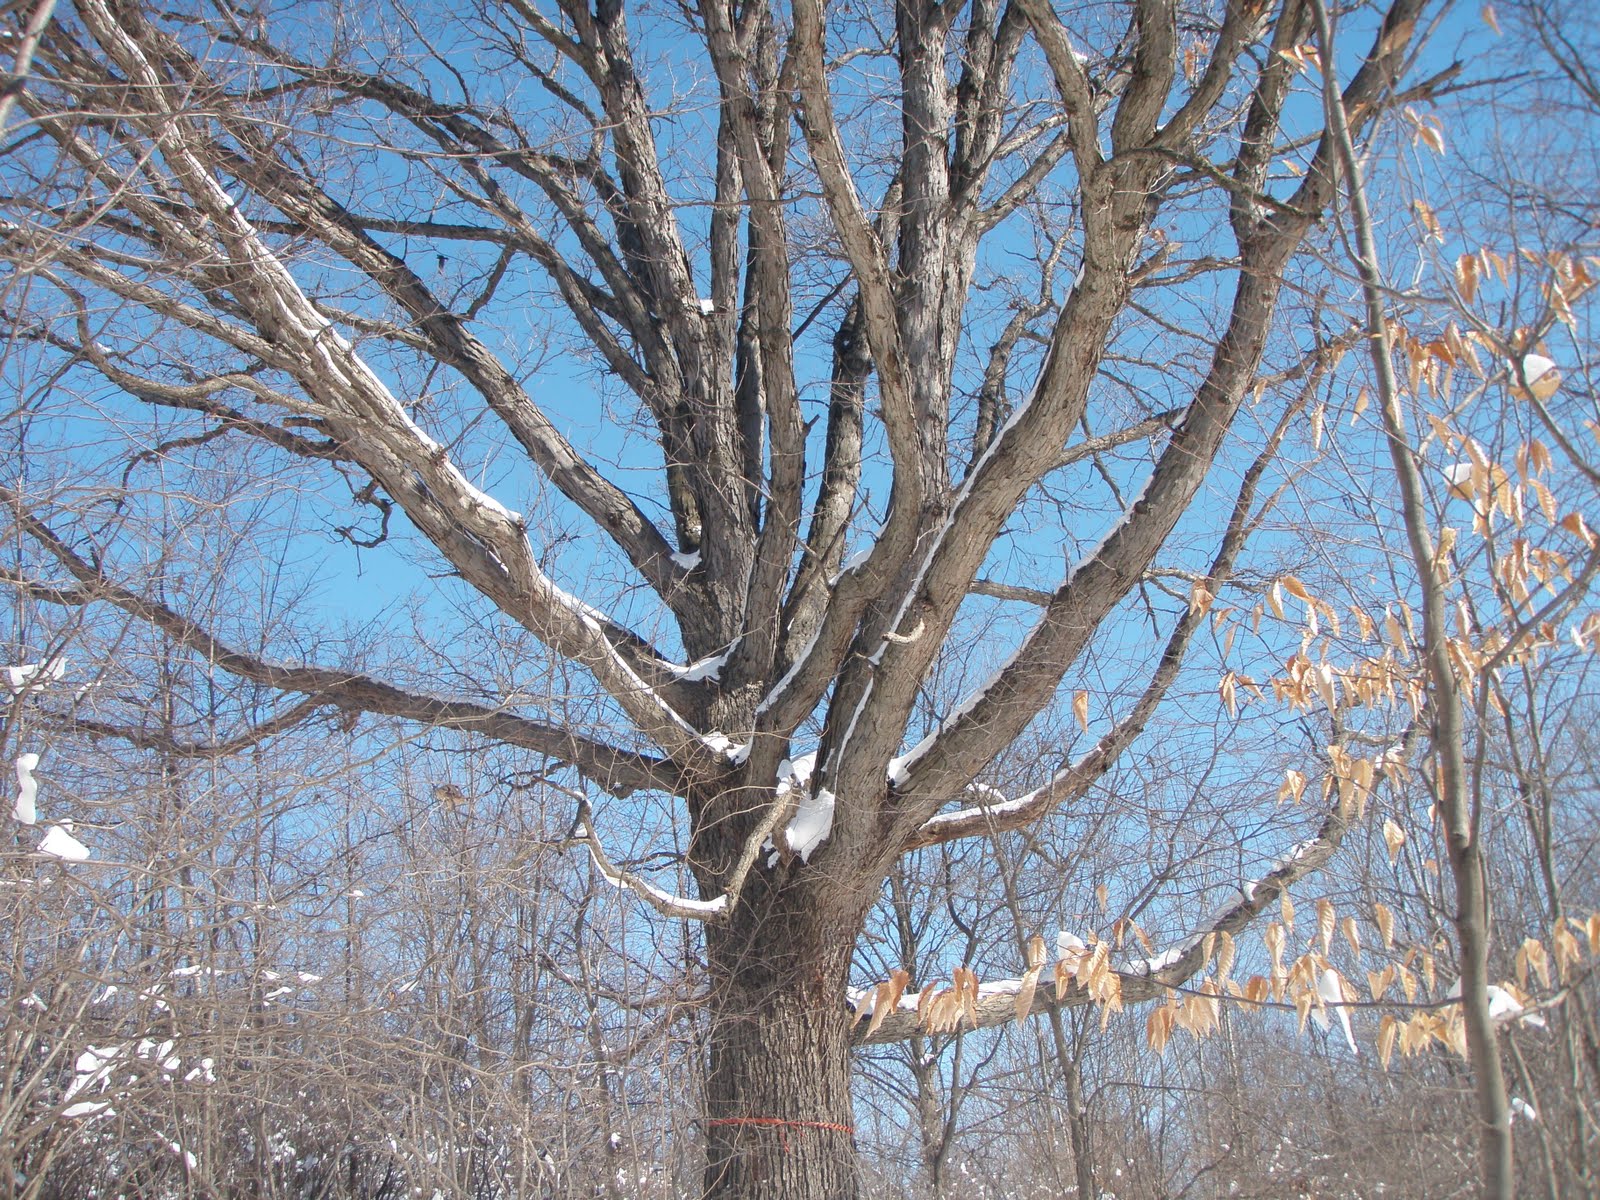 Indiana bat seasonal tree clearing dates